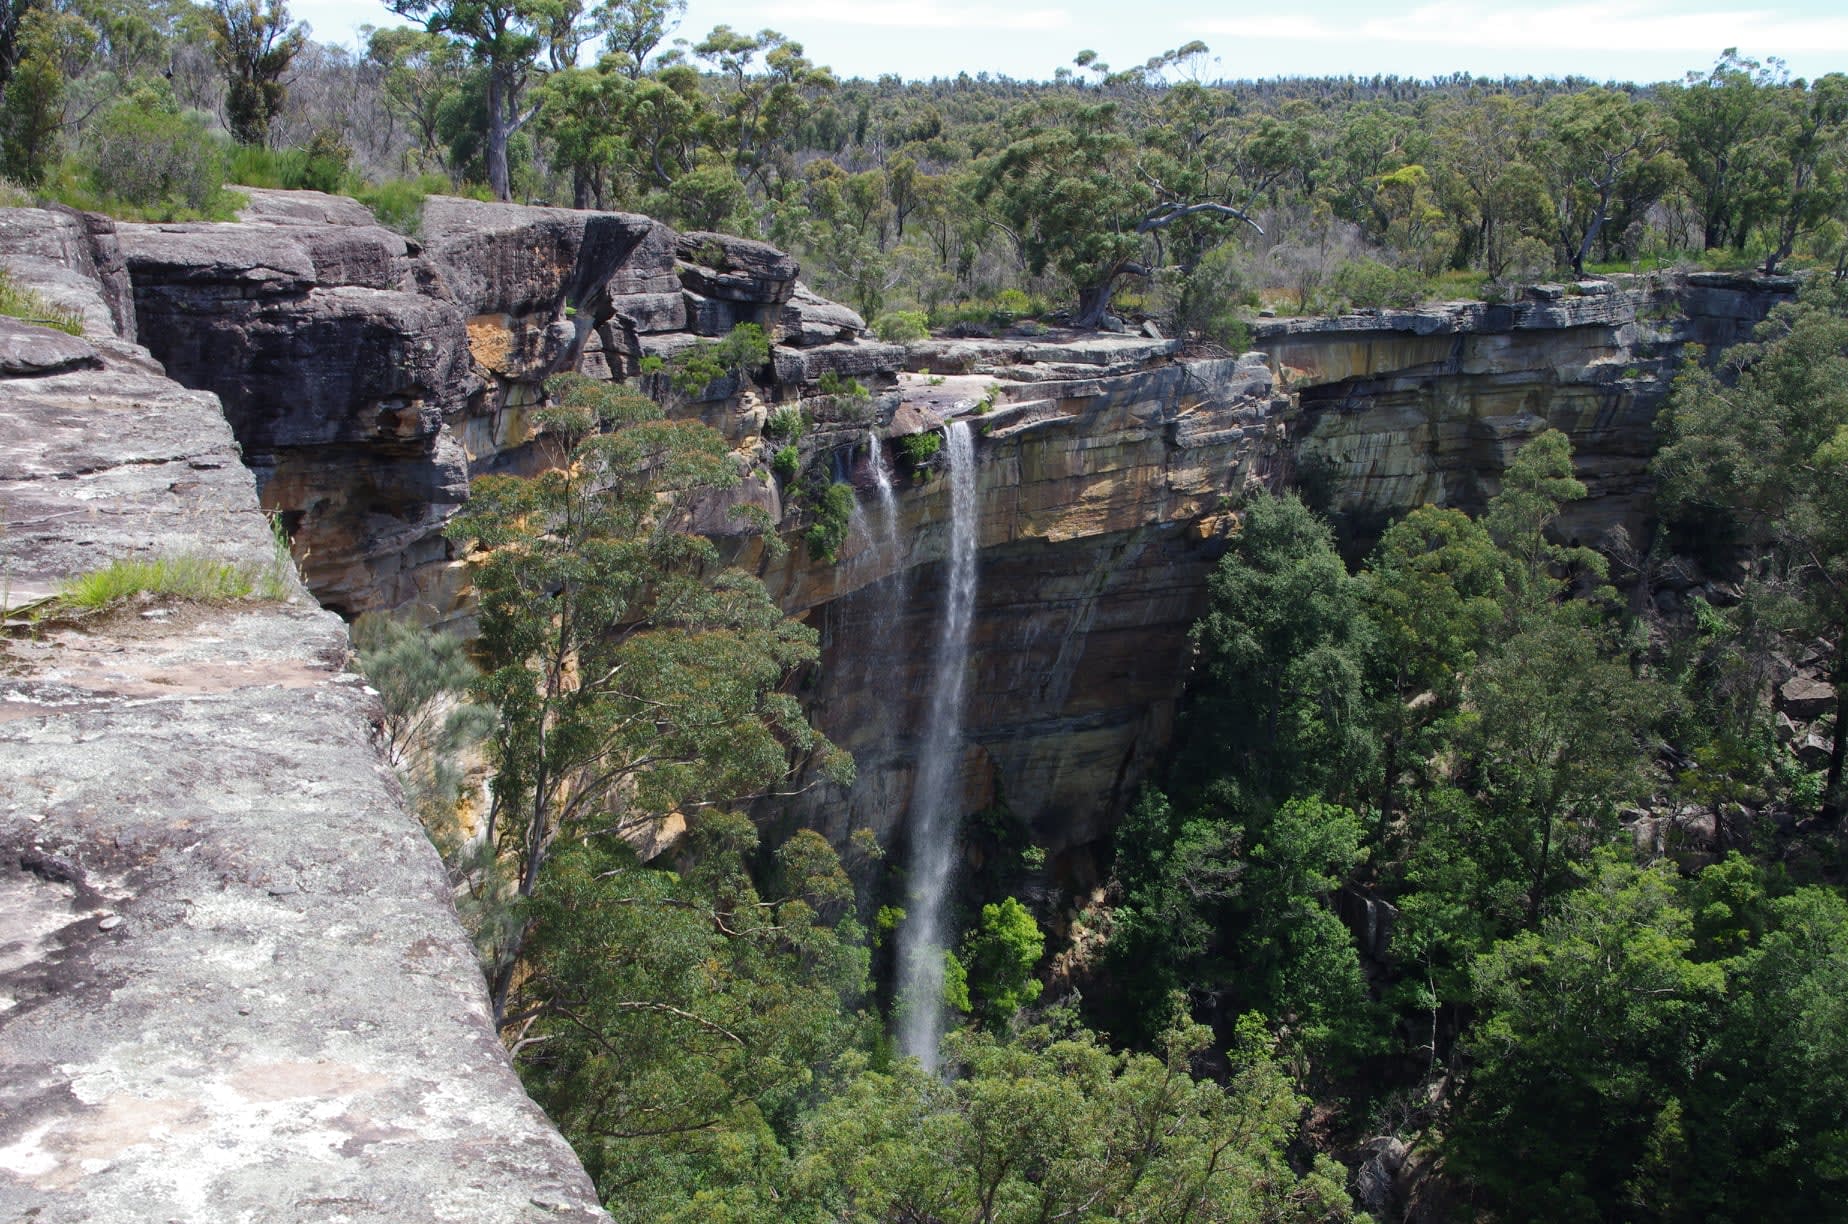 Tianjara Falls are approx 30km away.